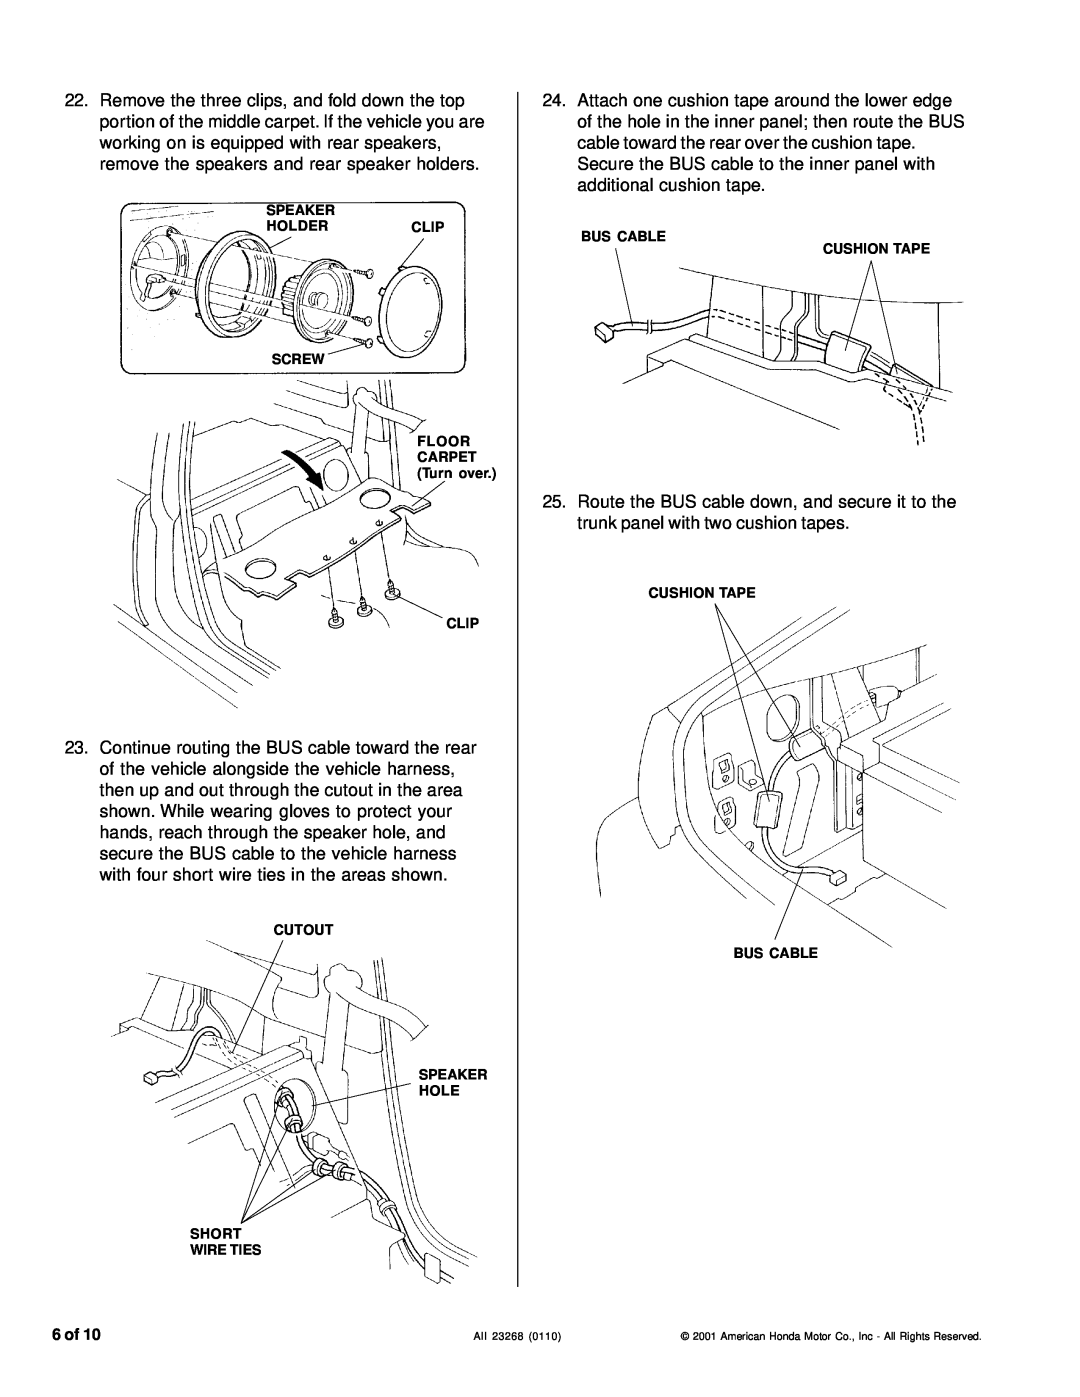 Honda Power Equipment CD Changer 6 of, Speaker Holderclip Screw Floor, Clip, Cutout Speaker Hole Short Wire Ties 